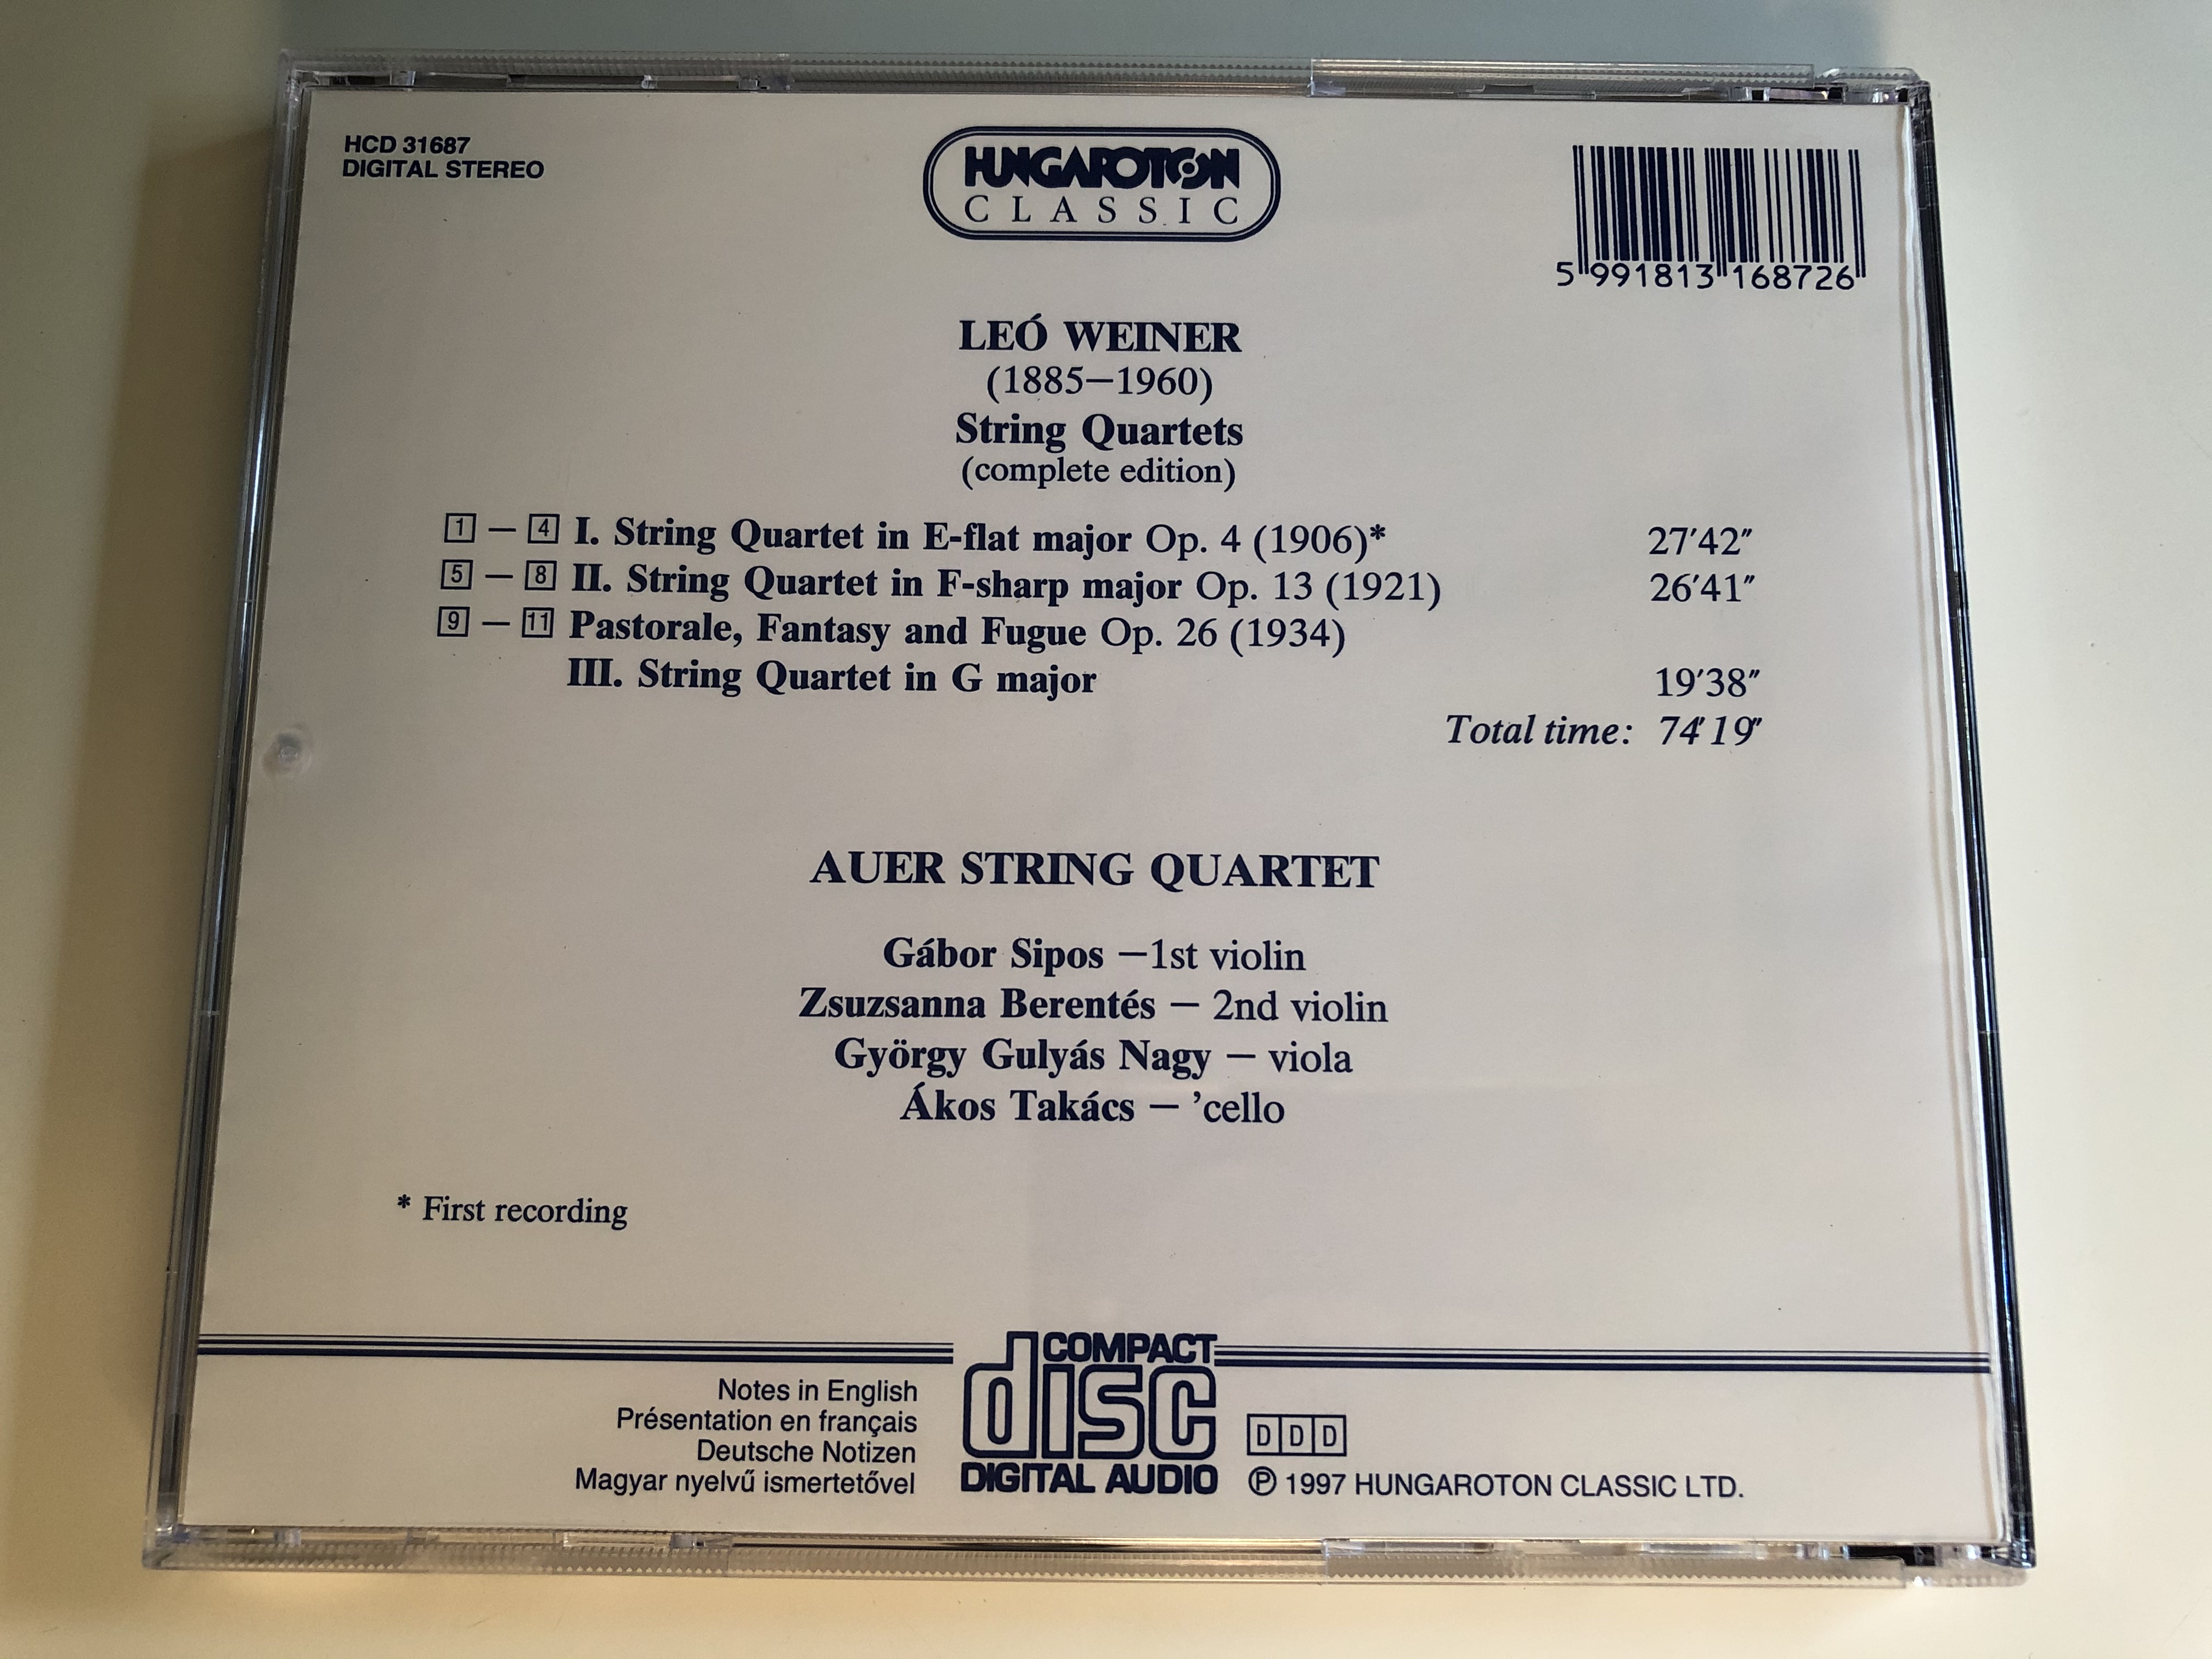 le-weiner-string-quartets-opp.-4-13-26-complete-auer-string-quartet-hungaroton-classic-audio-cd-1997-stereo-hcd-31687-11-.jpg